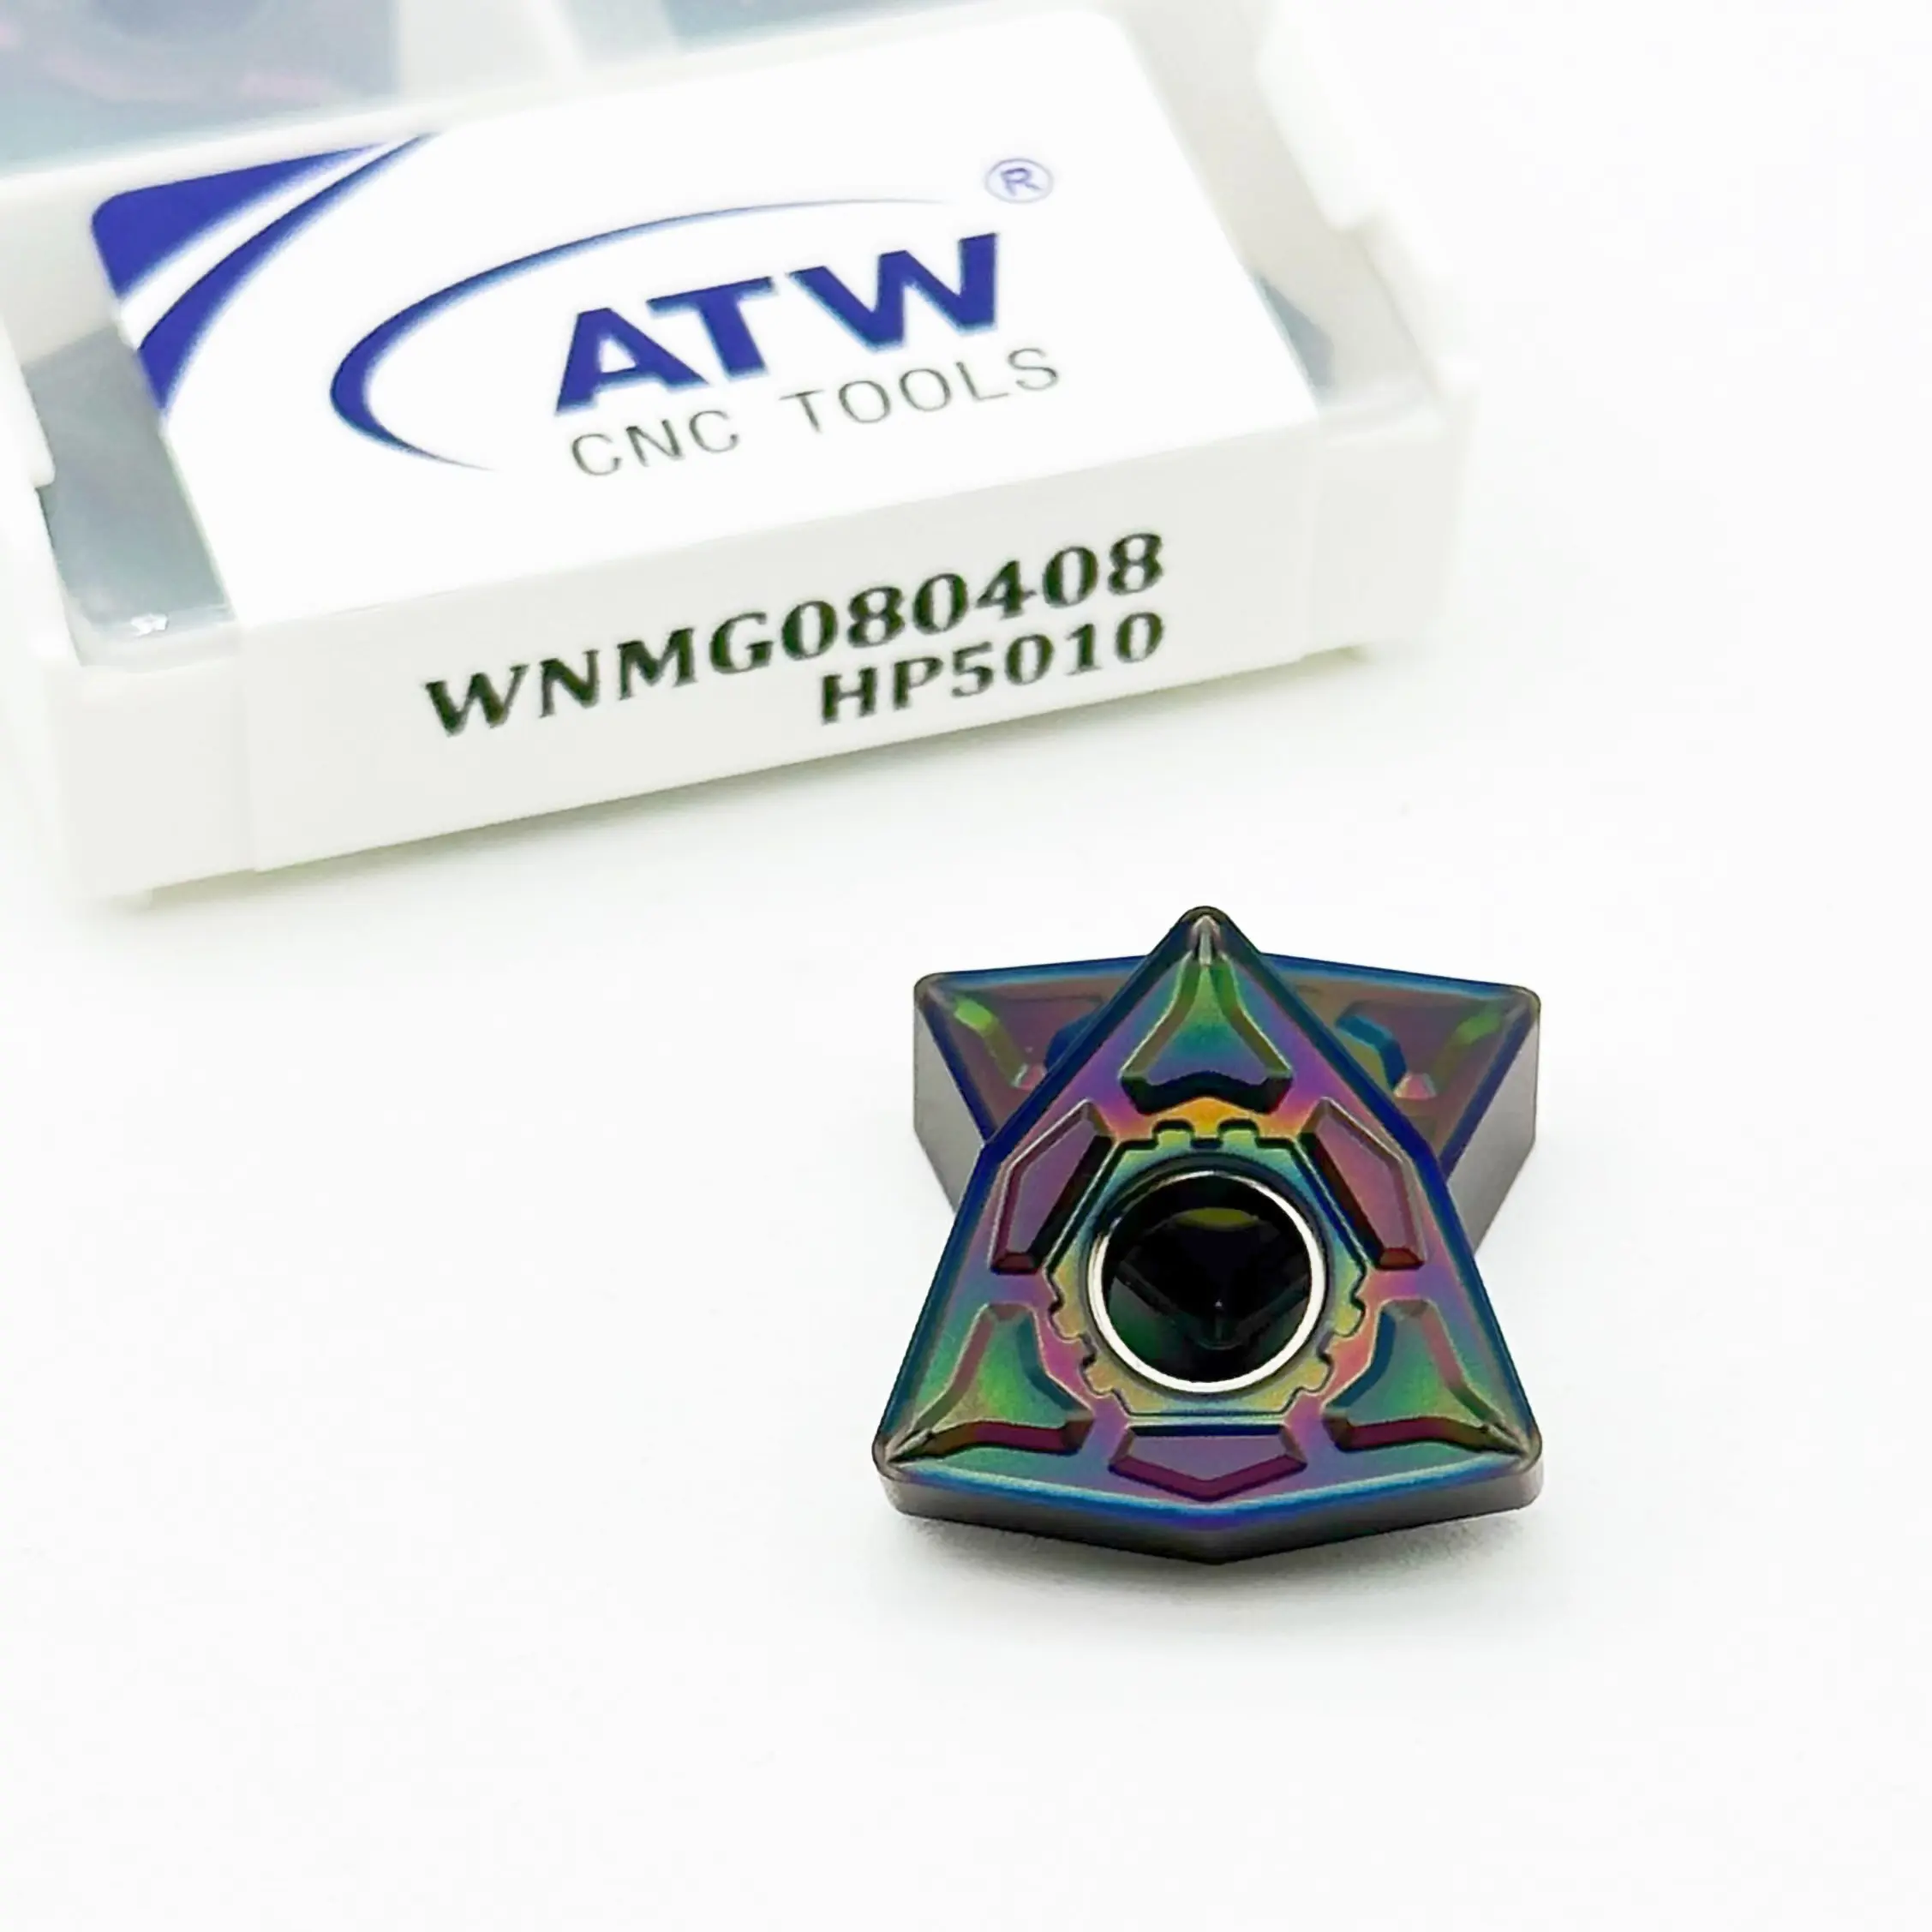 ATW WNMG080408 /04/12 HP5010 CNC אינדקס חיתוך כלים מחרטה עיבוד טונגסטן קרביד הפיכת מוסיף